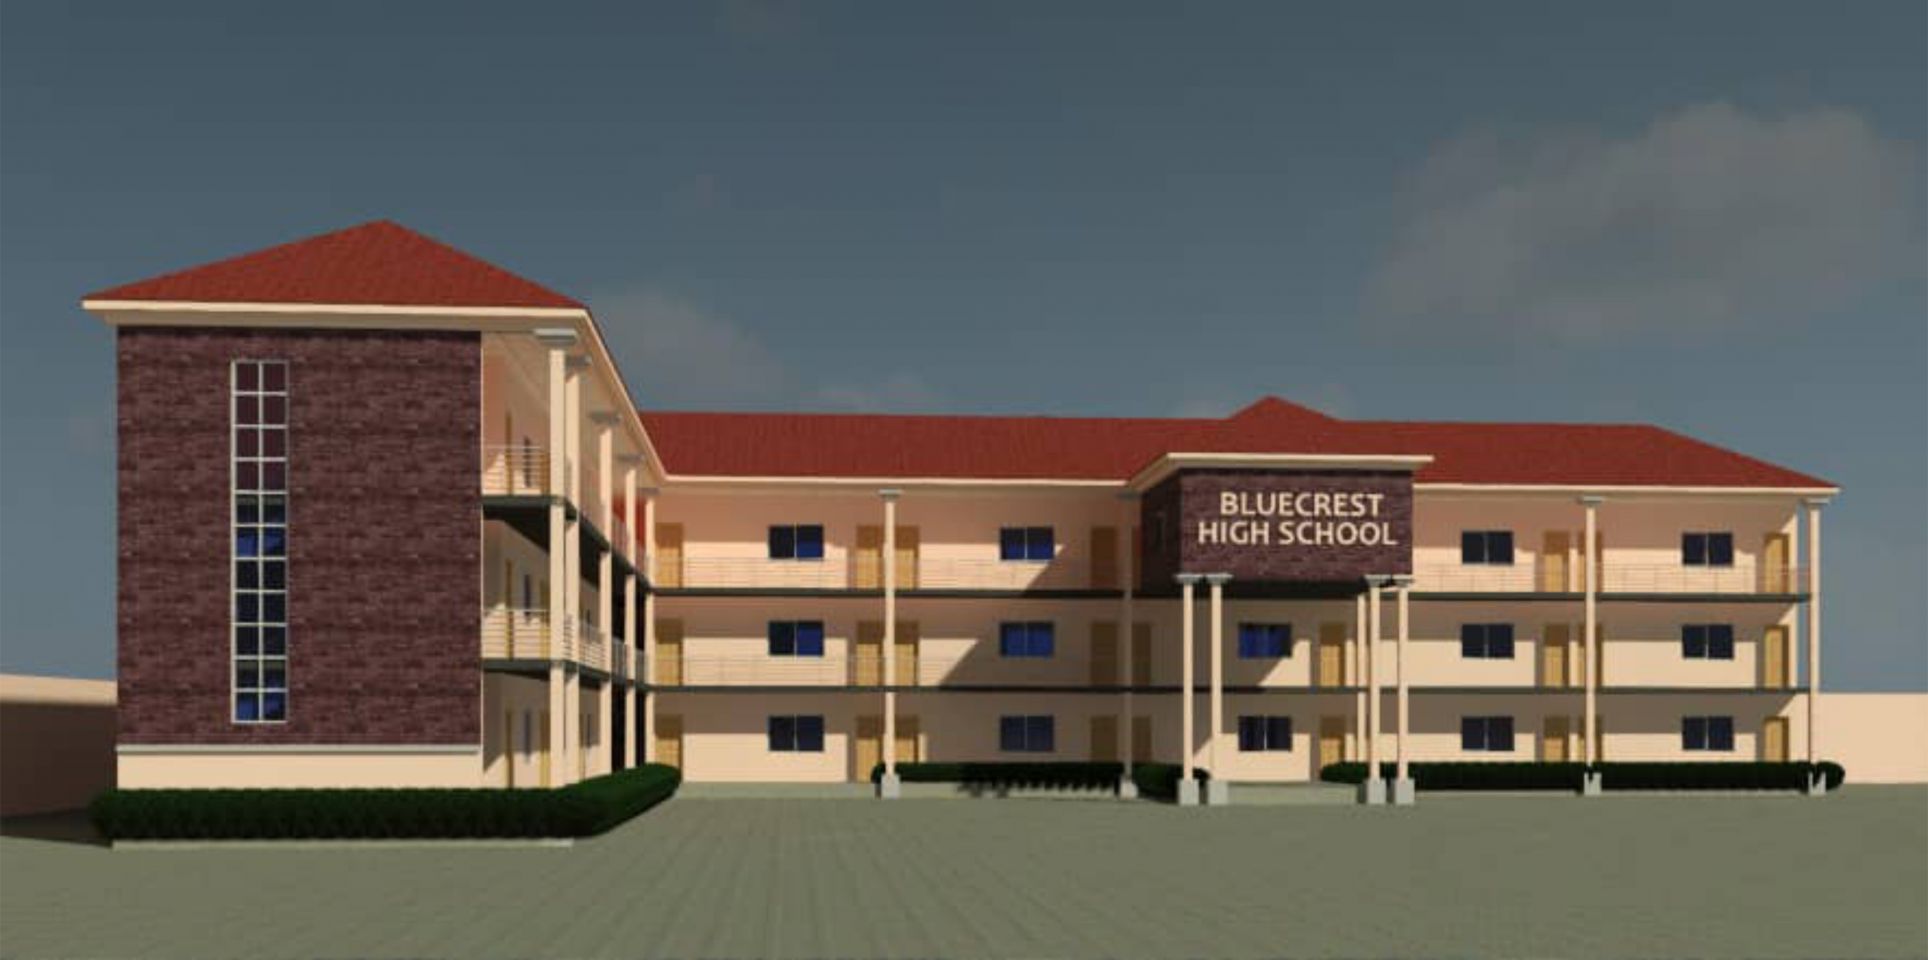 BLUECREST HIGH SCHOOL